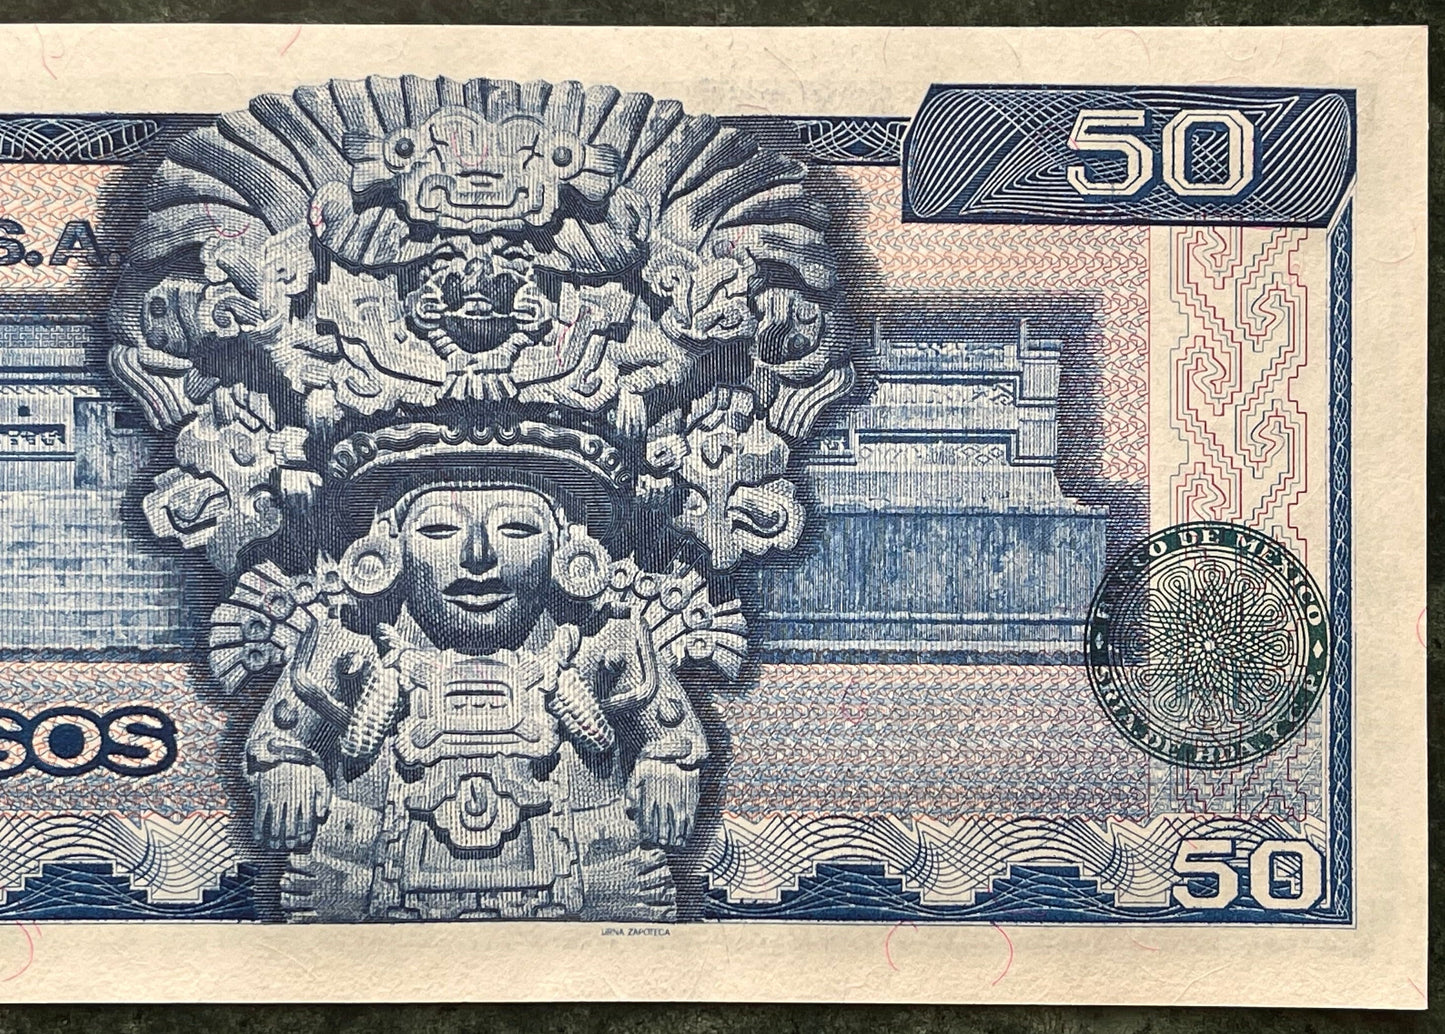 Zapotec Maize God of Abundant Sustenance Pitao Cozobi & Benito Juarez 50 Pesos Mexico Authentic Banknote Money for Collage (Oaxaca) (Palace)